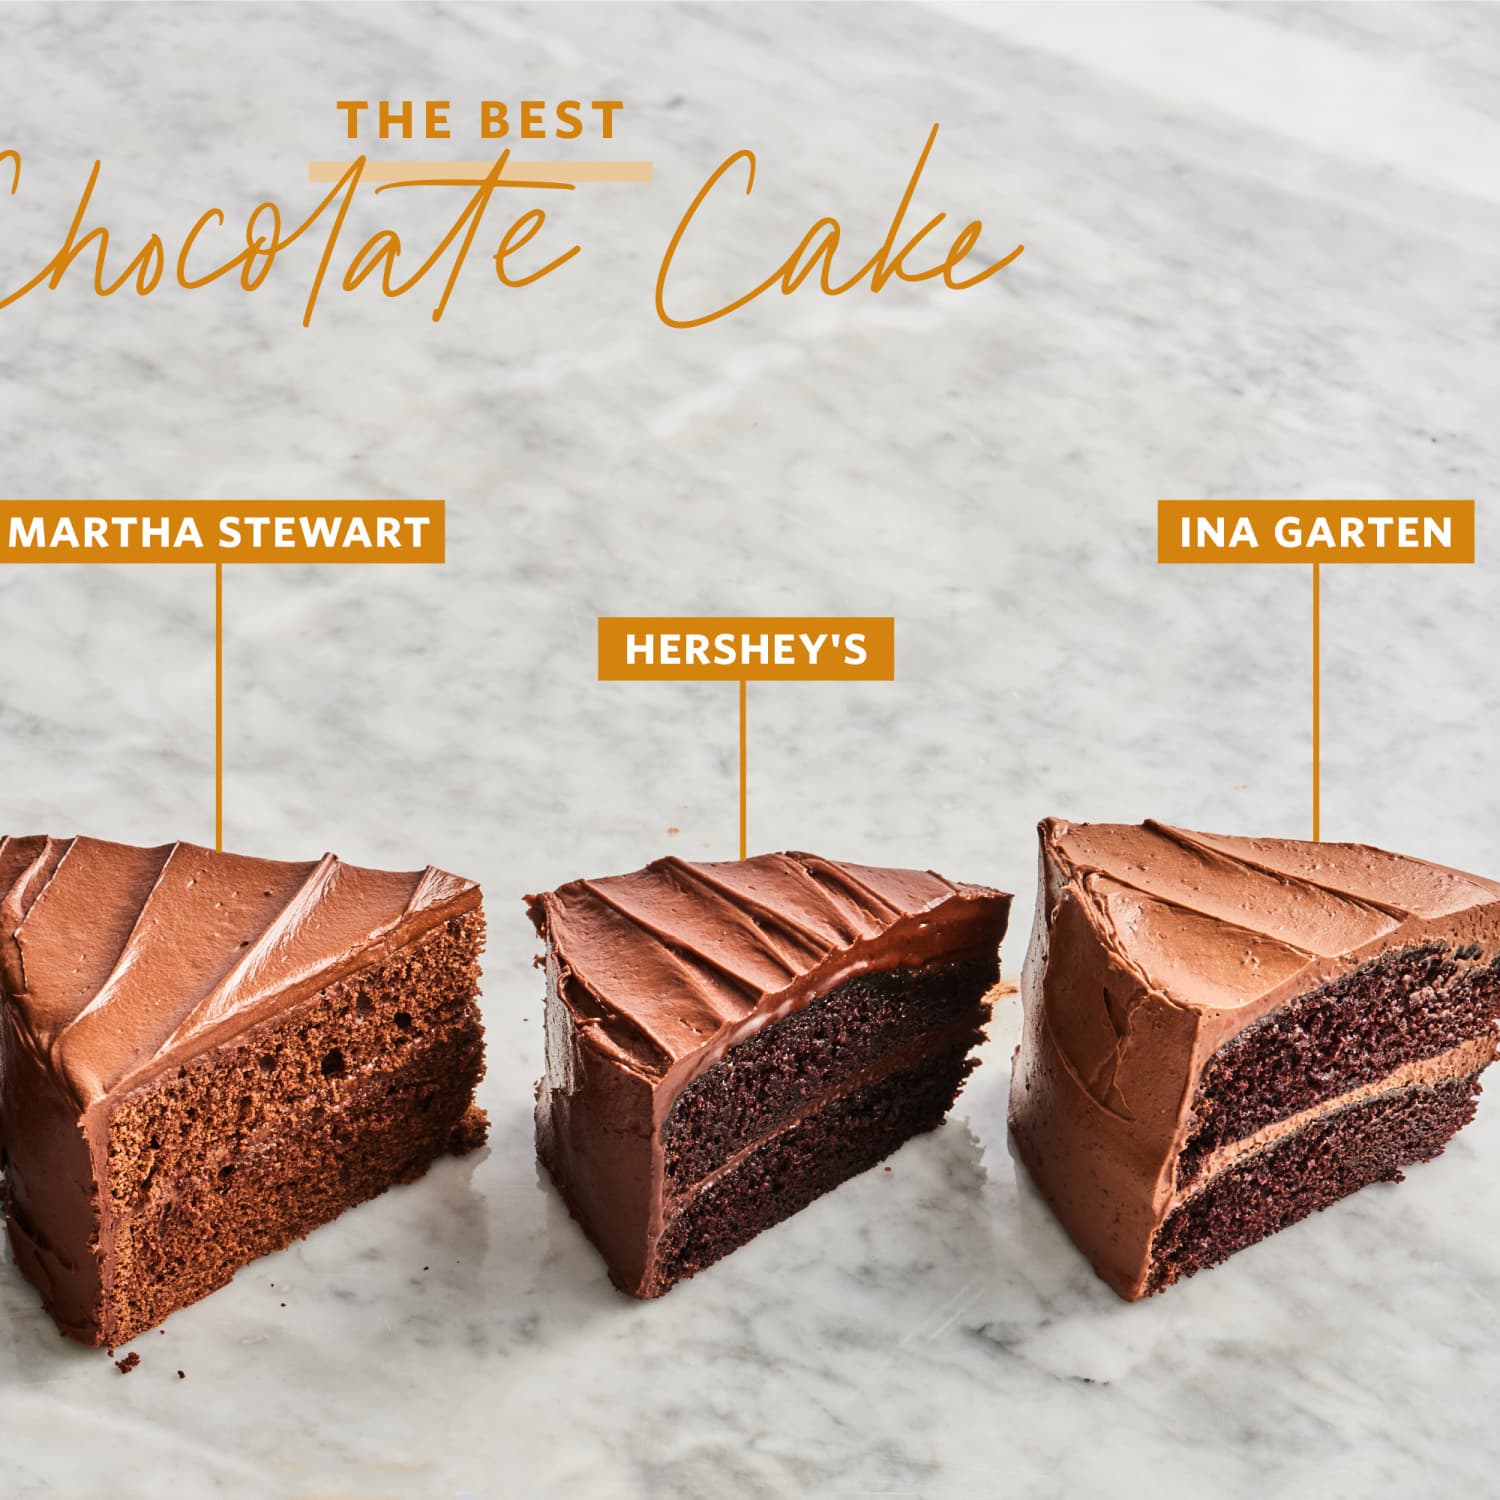 Mini Chocolate Cake Recipe: The Perfect Date Night Dessert